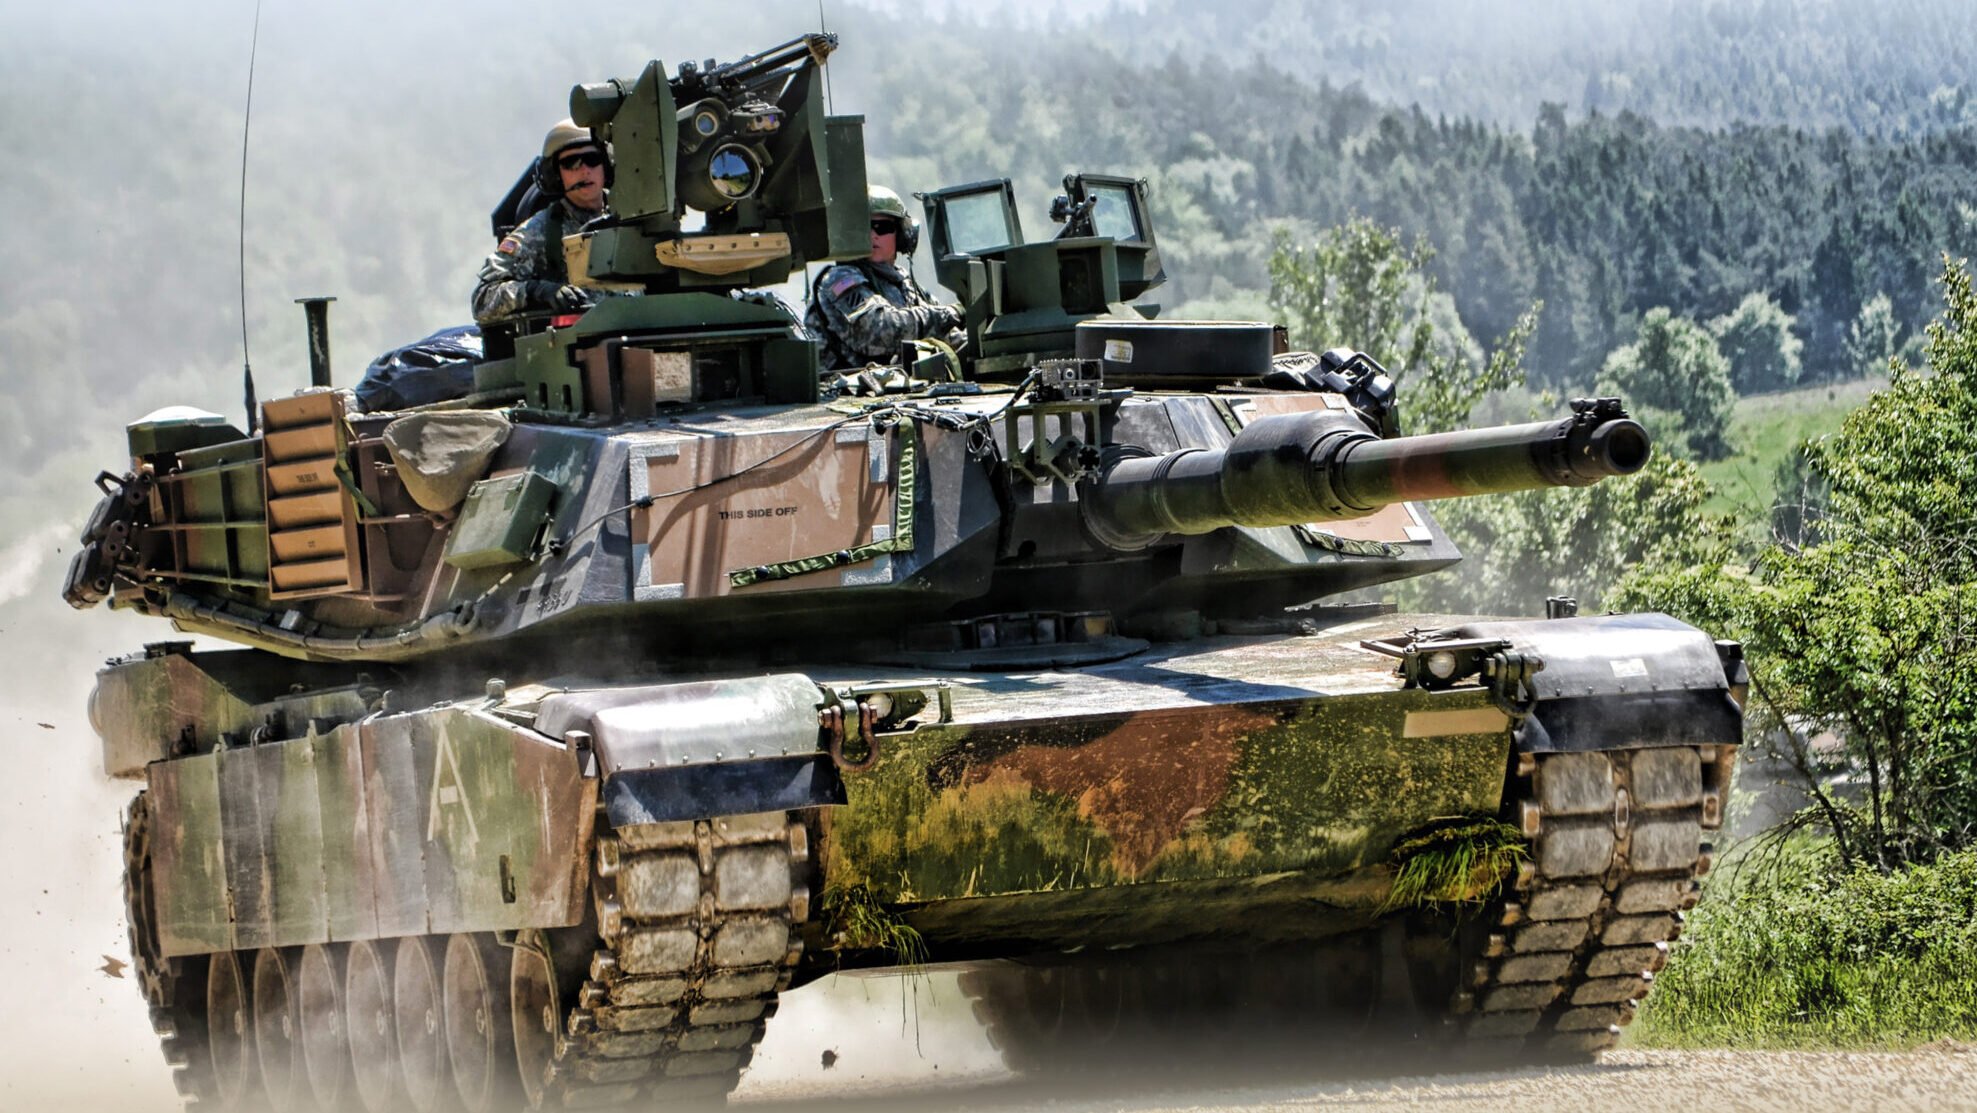 Poland to receive 250 advanced Abrams tanks under $1 billion contract